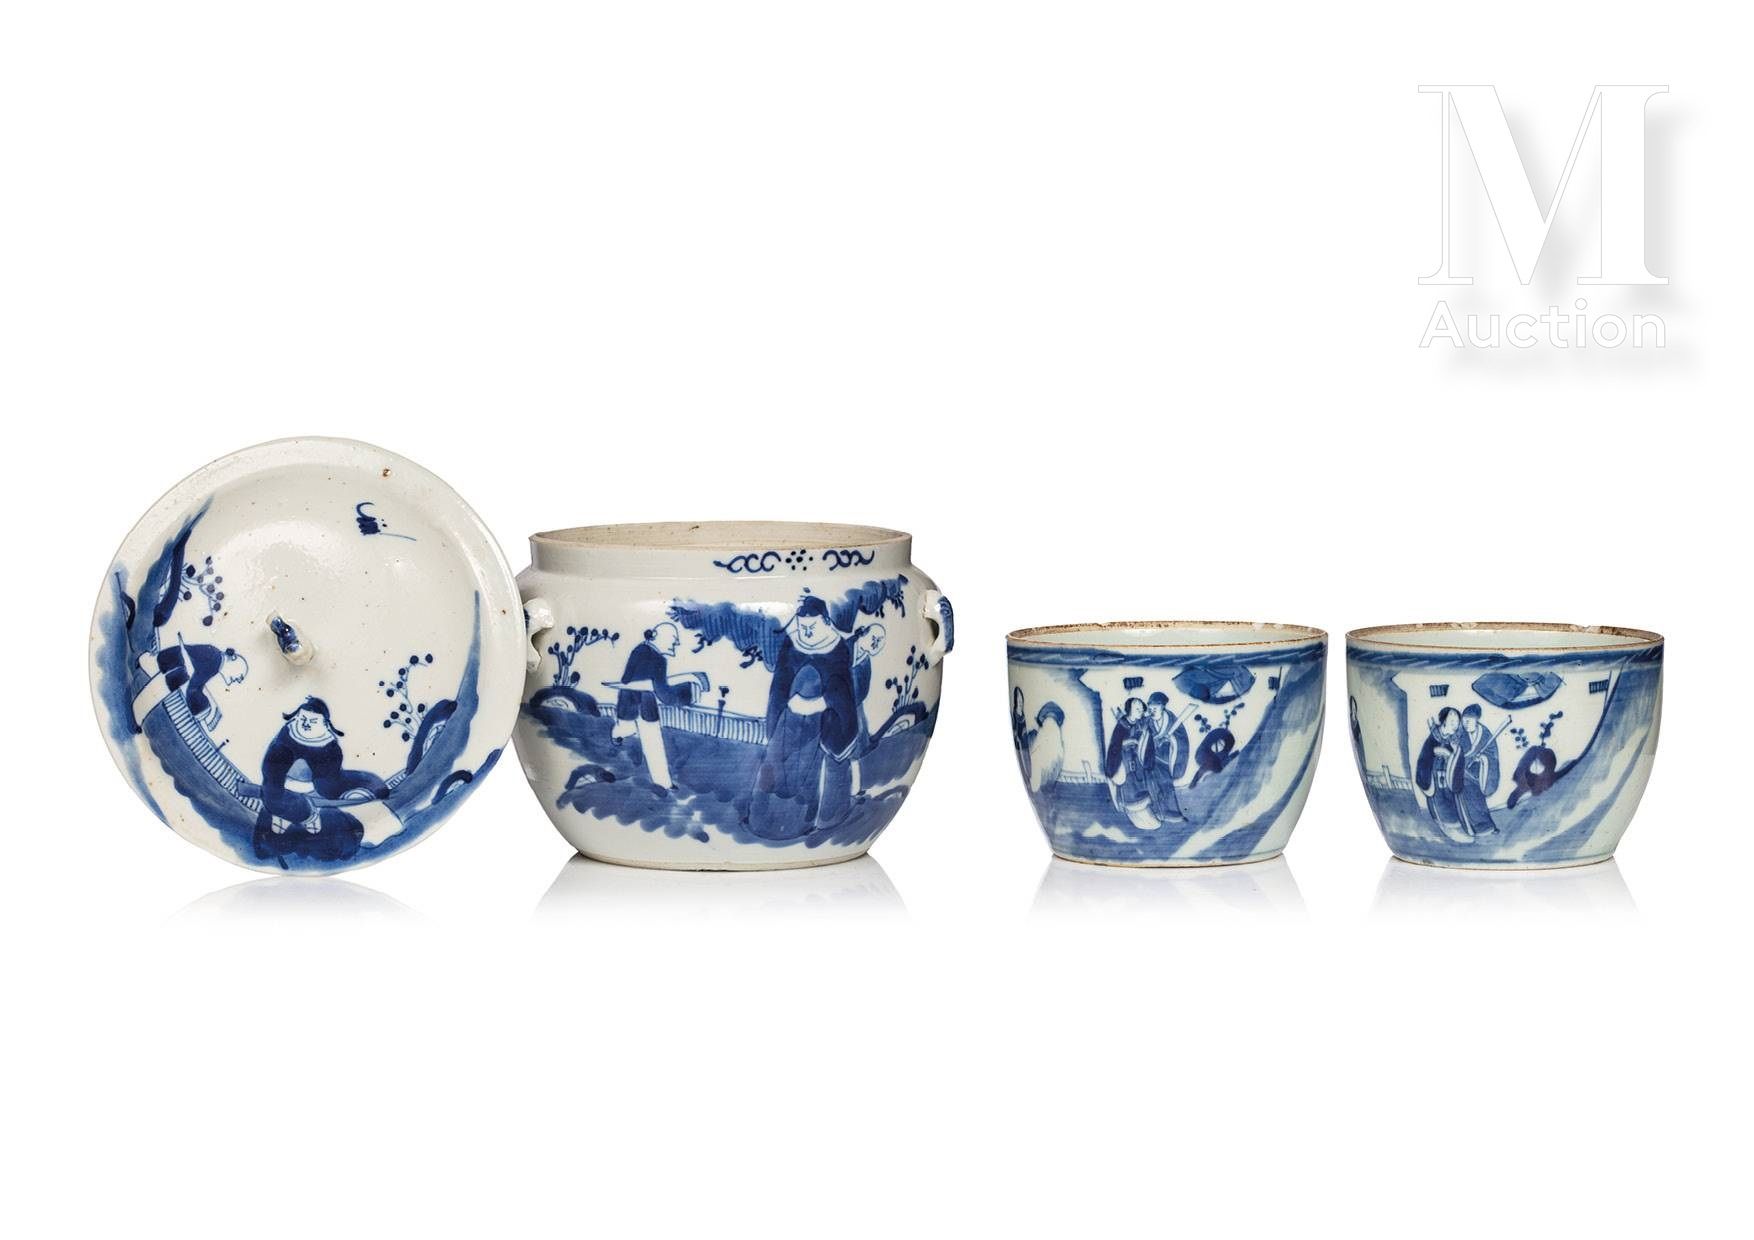 CHINE, XIXe/XXe siècle, Ensemble de trois porcelaines 饰有蓝白相间的图案

一个有盖，另外两个盖子不见了。&hellip;